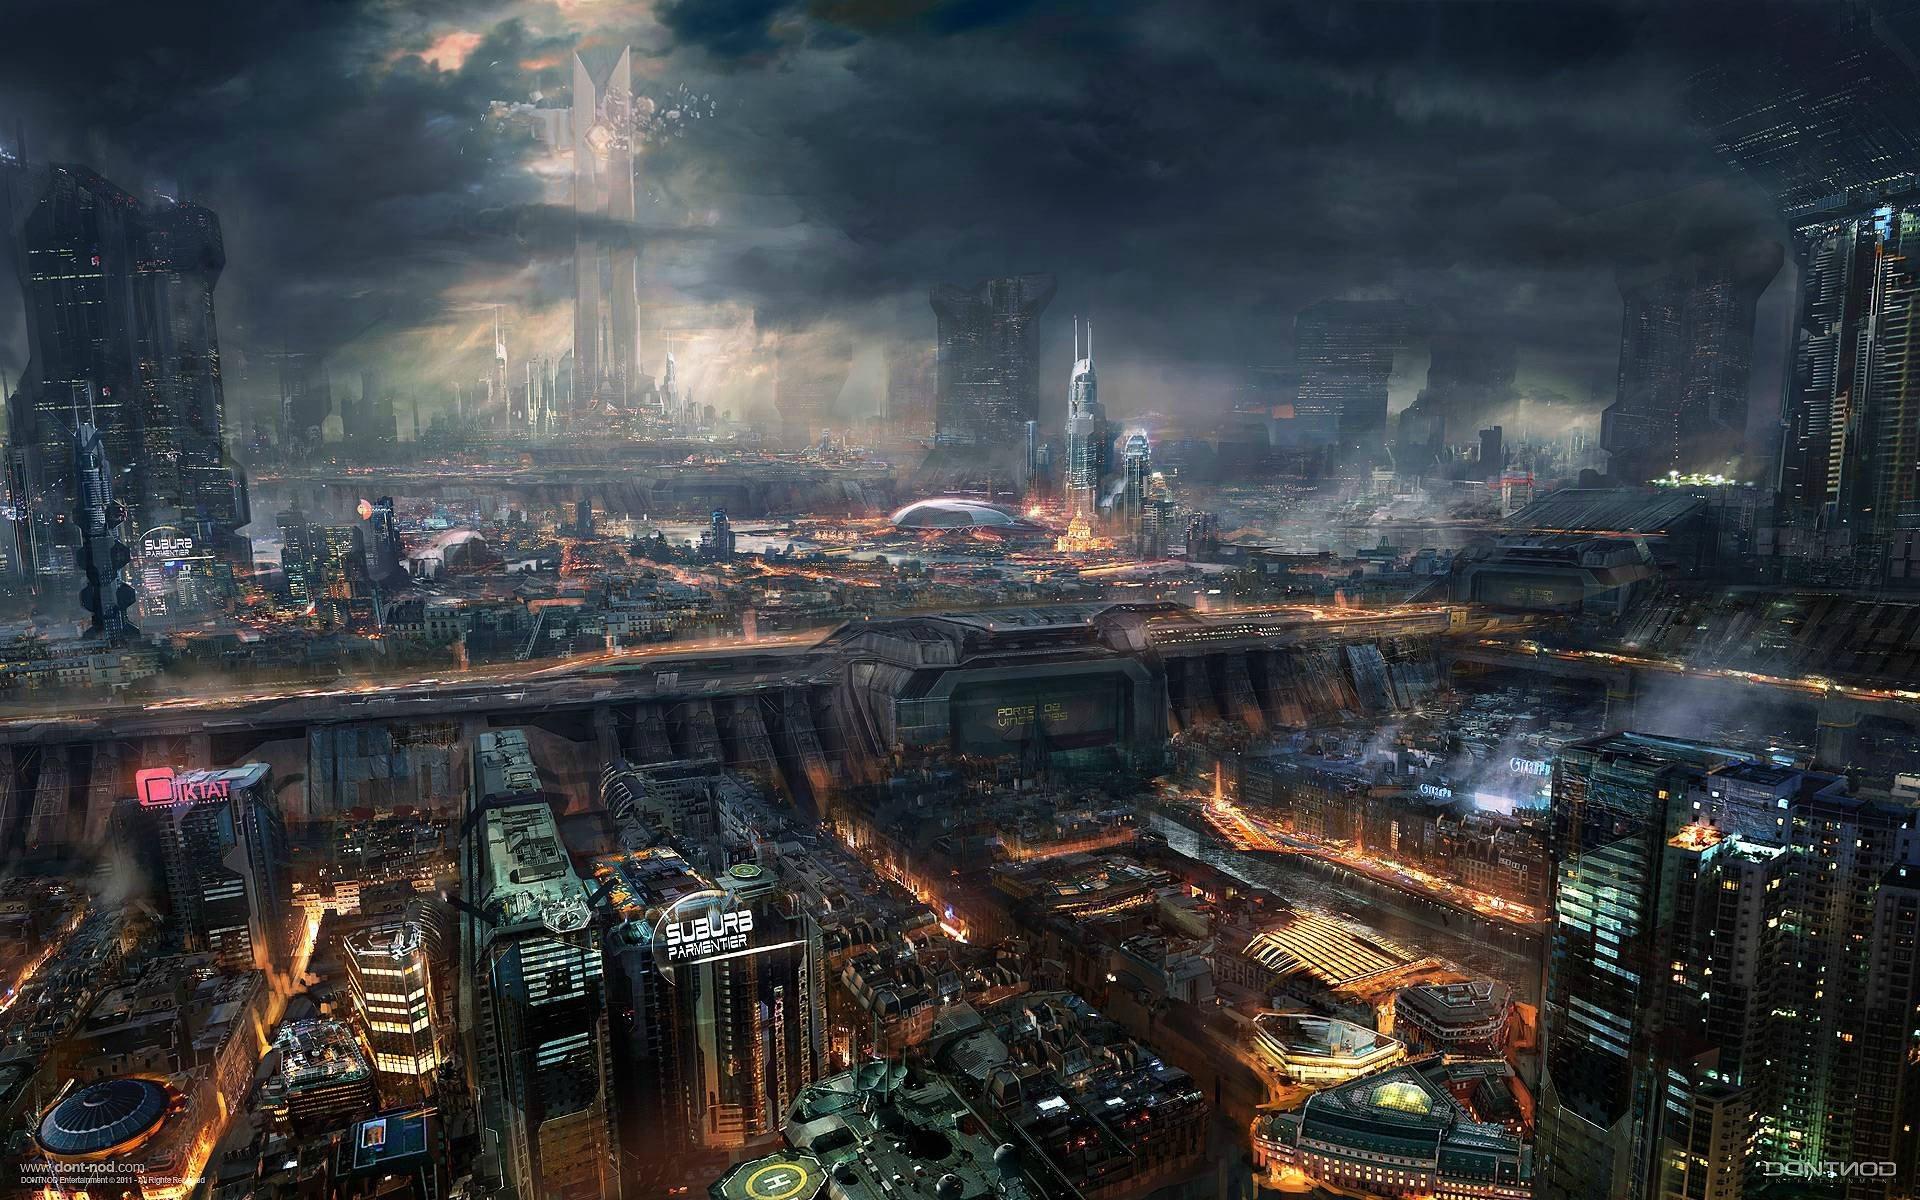 Future city in chaos